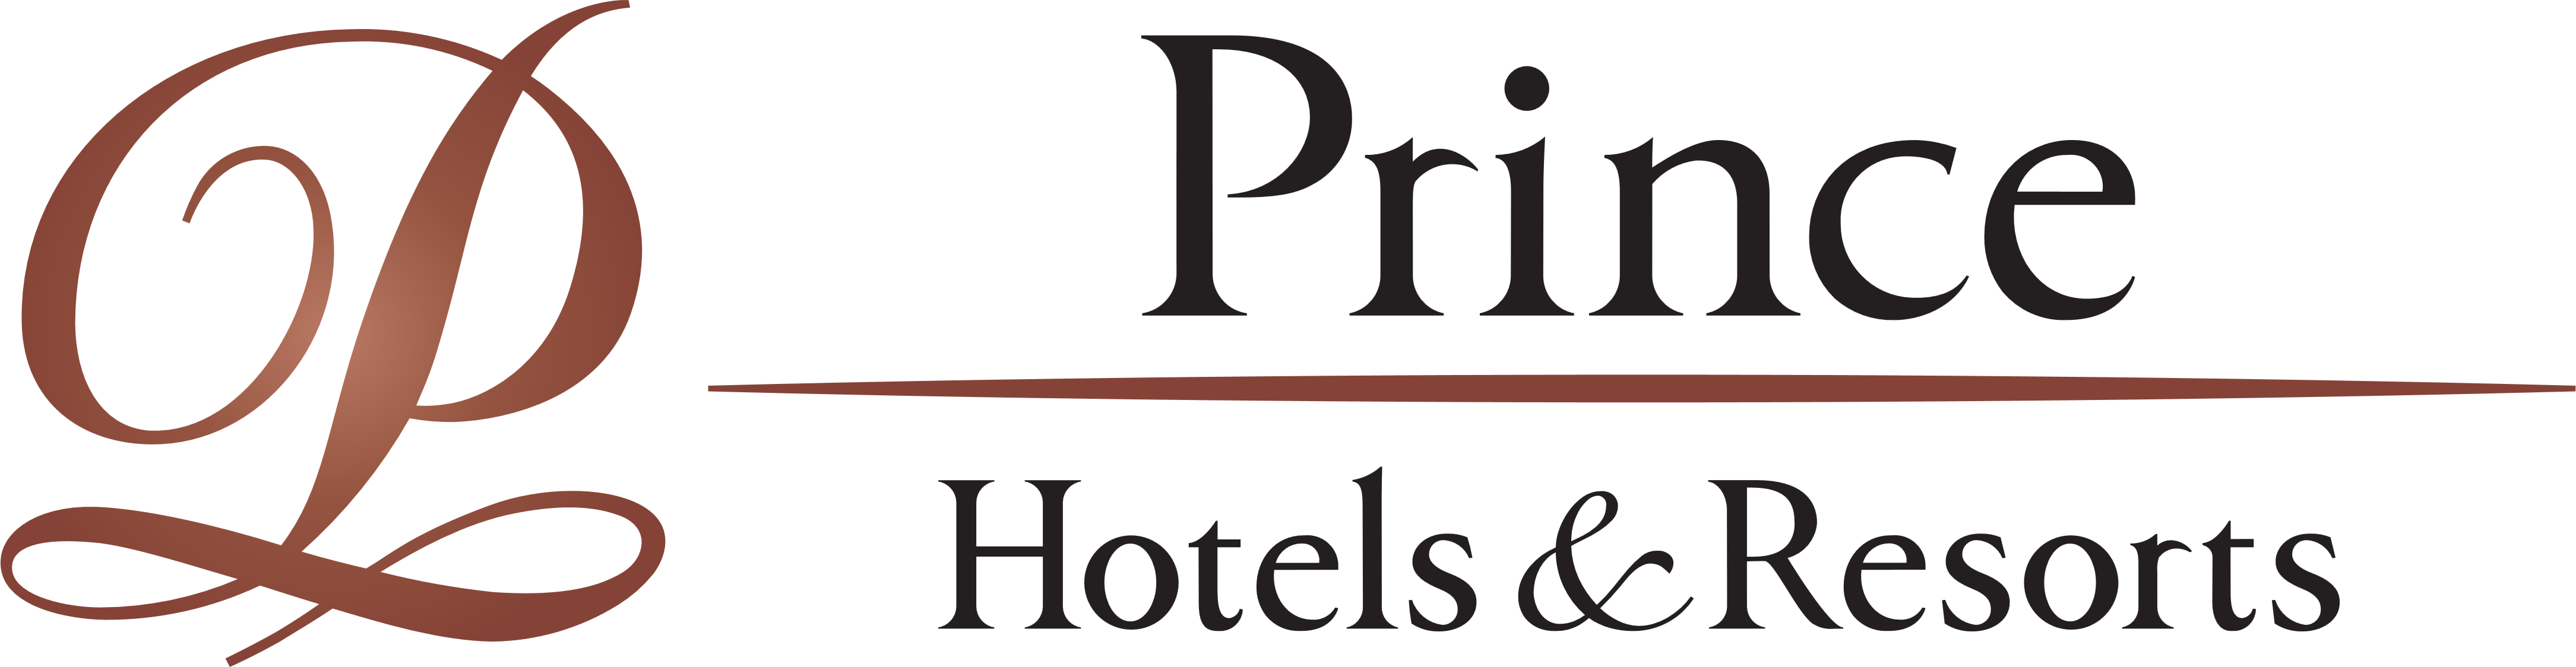 Prince_Hotels_and_Resorts_logo (1)